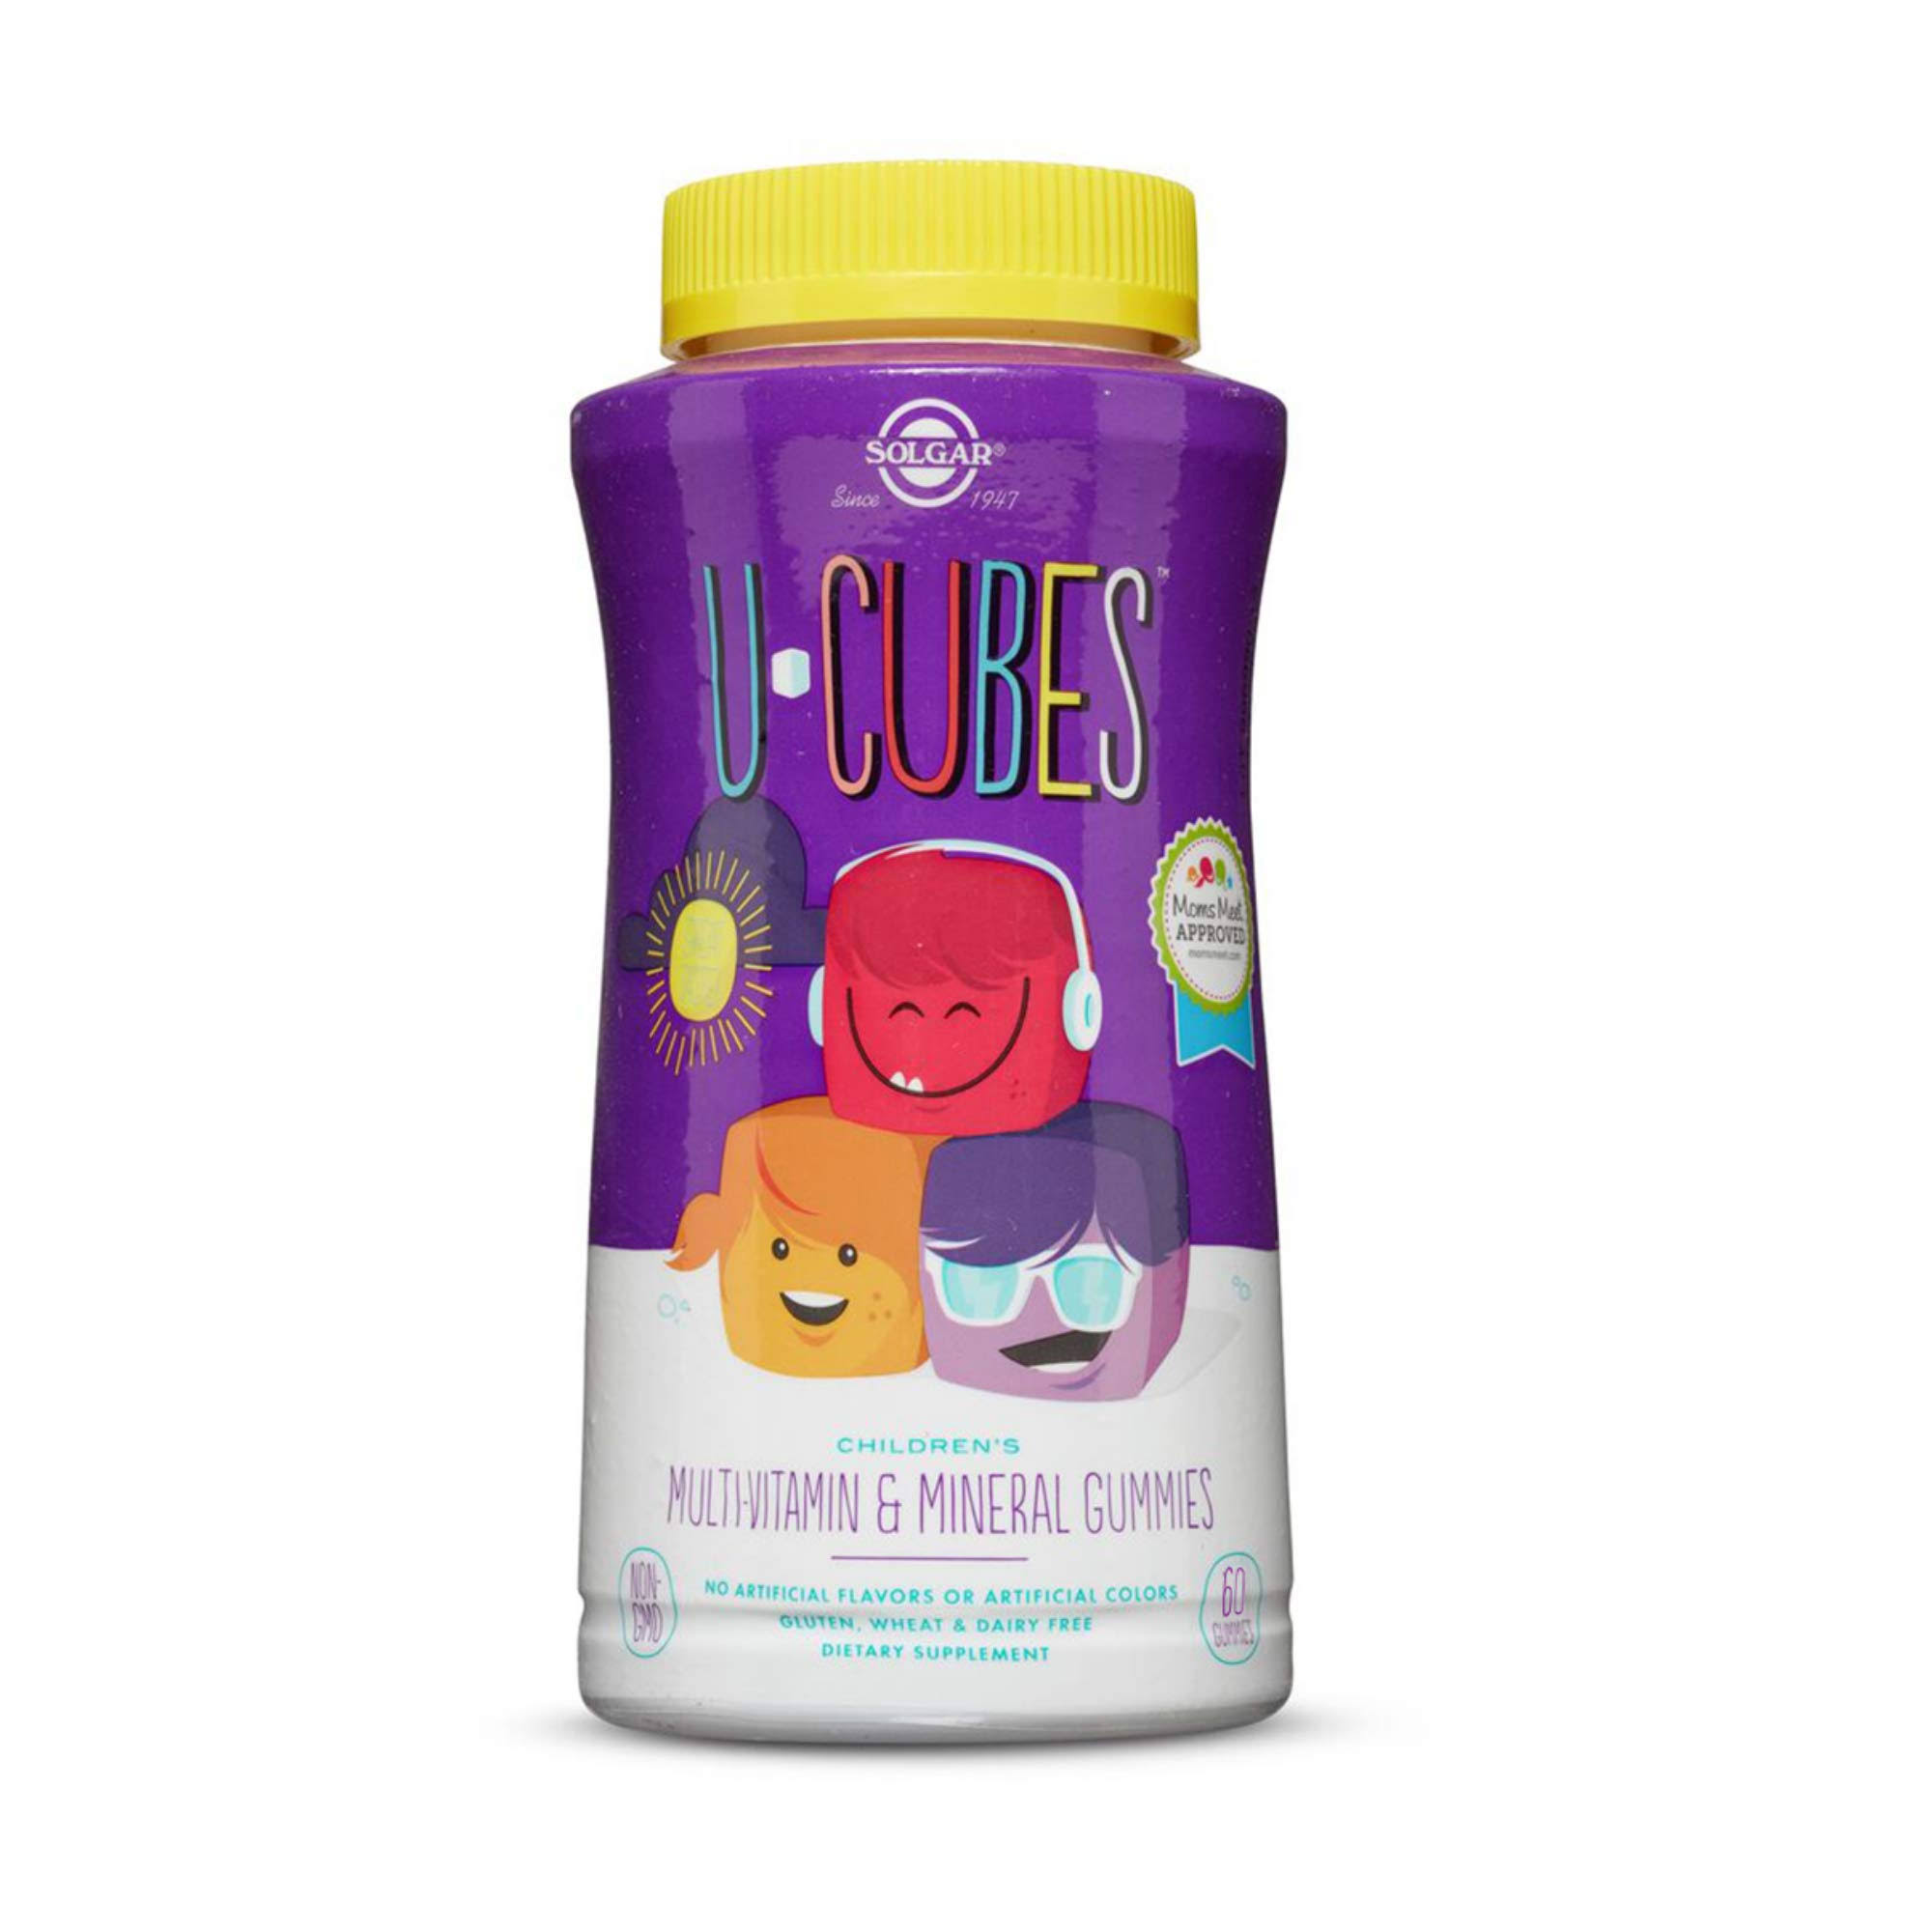 Solgar U-cubes Children's Multi-vitamin & Mineral Gummies - 60 Gummies